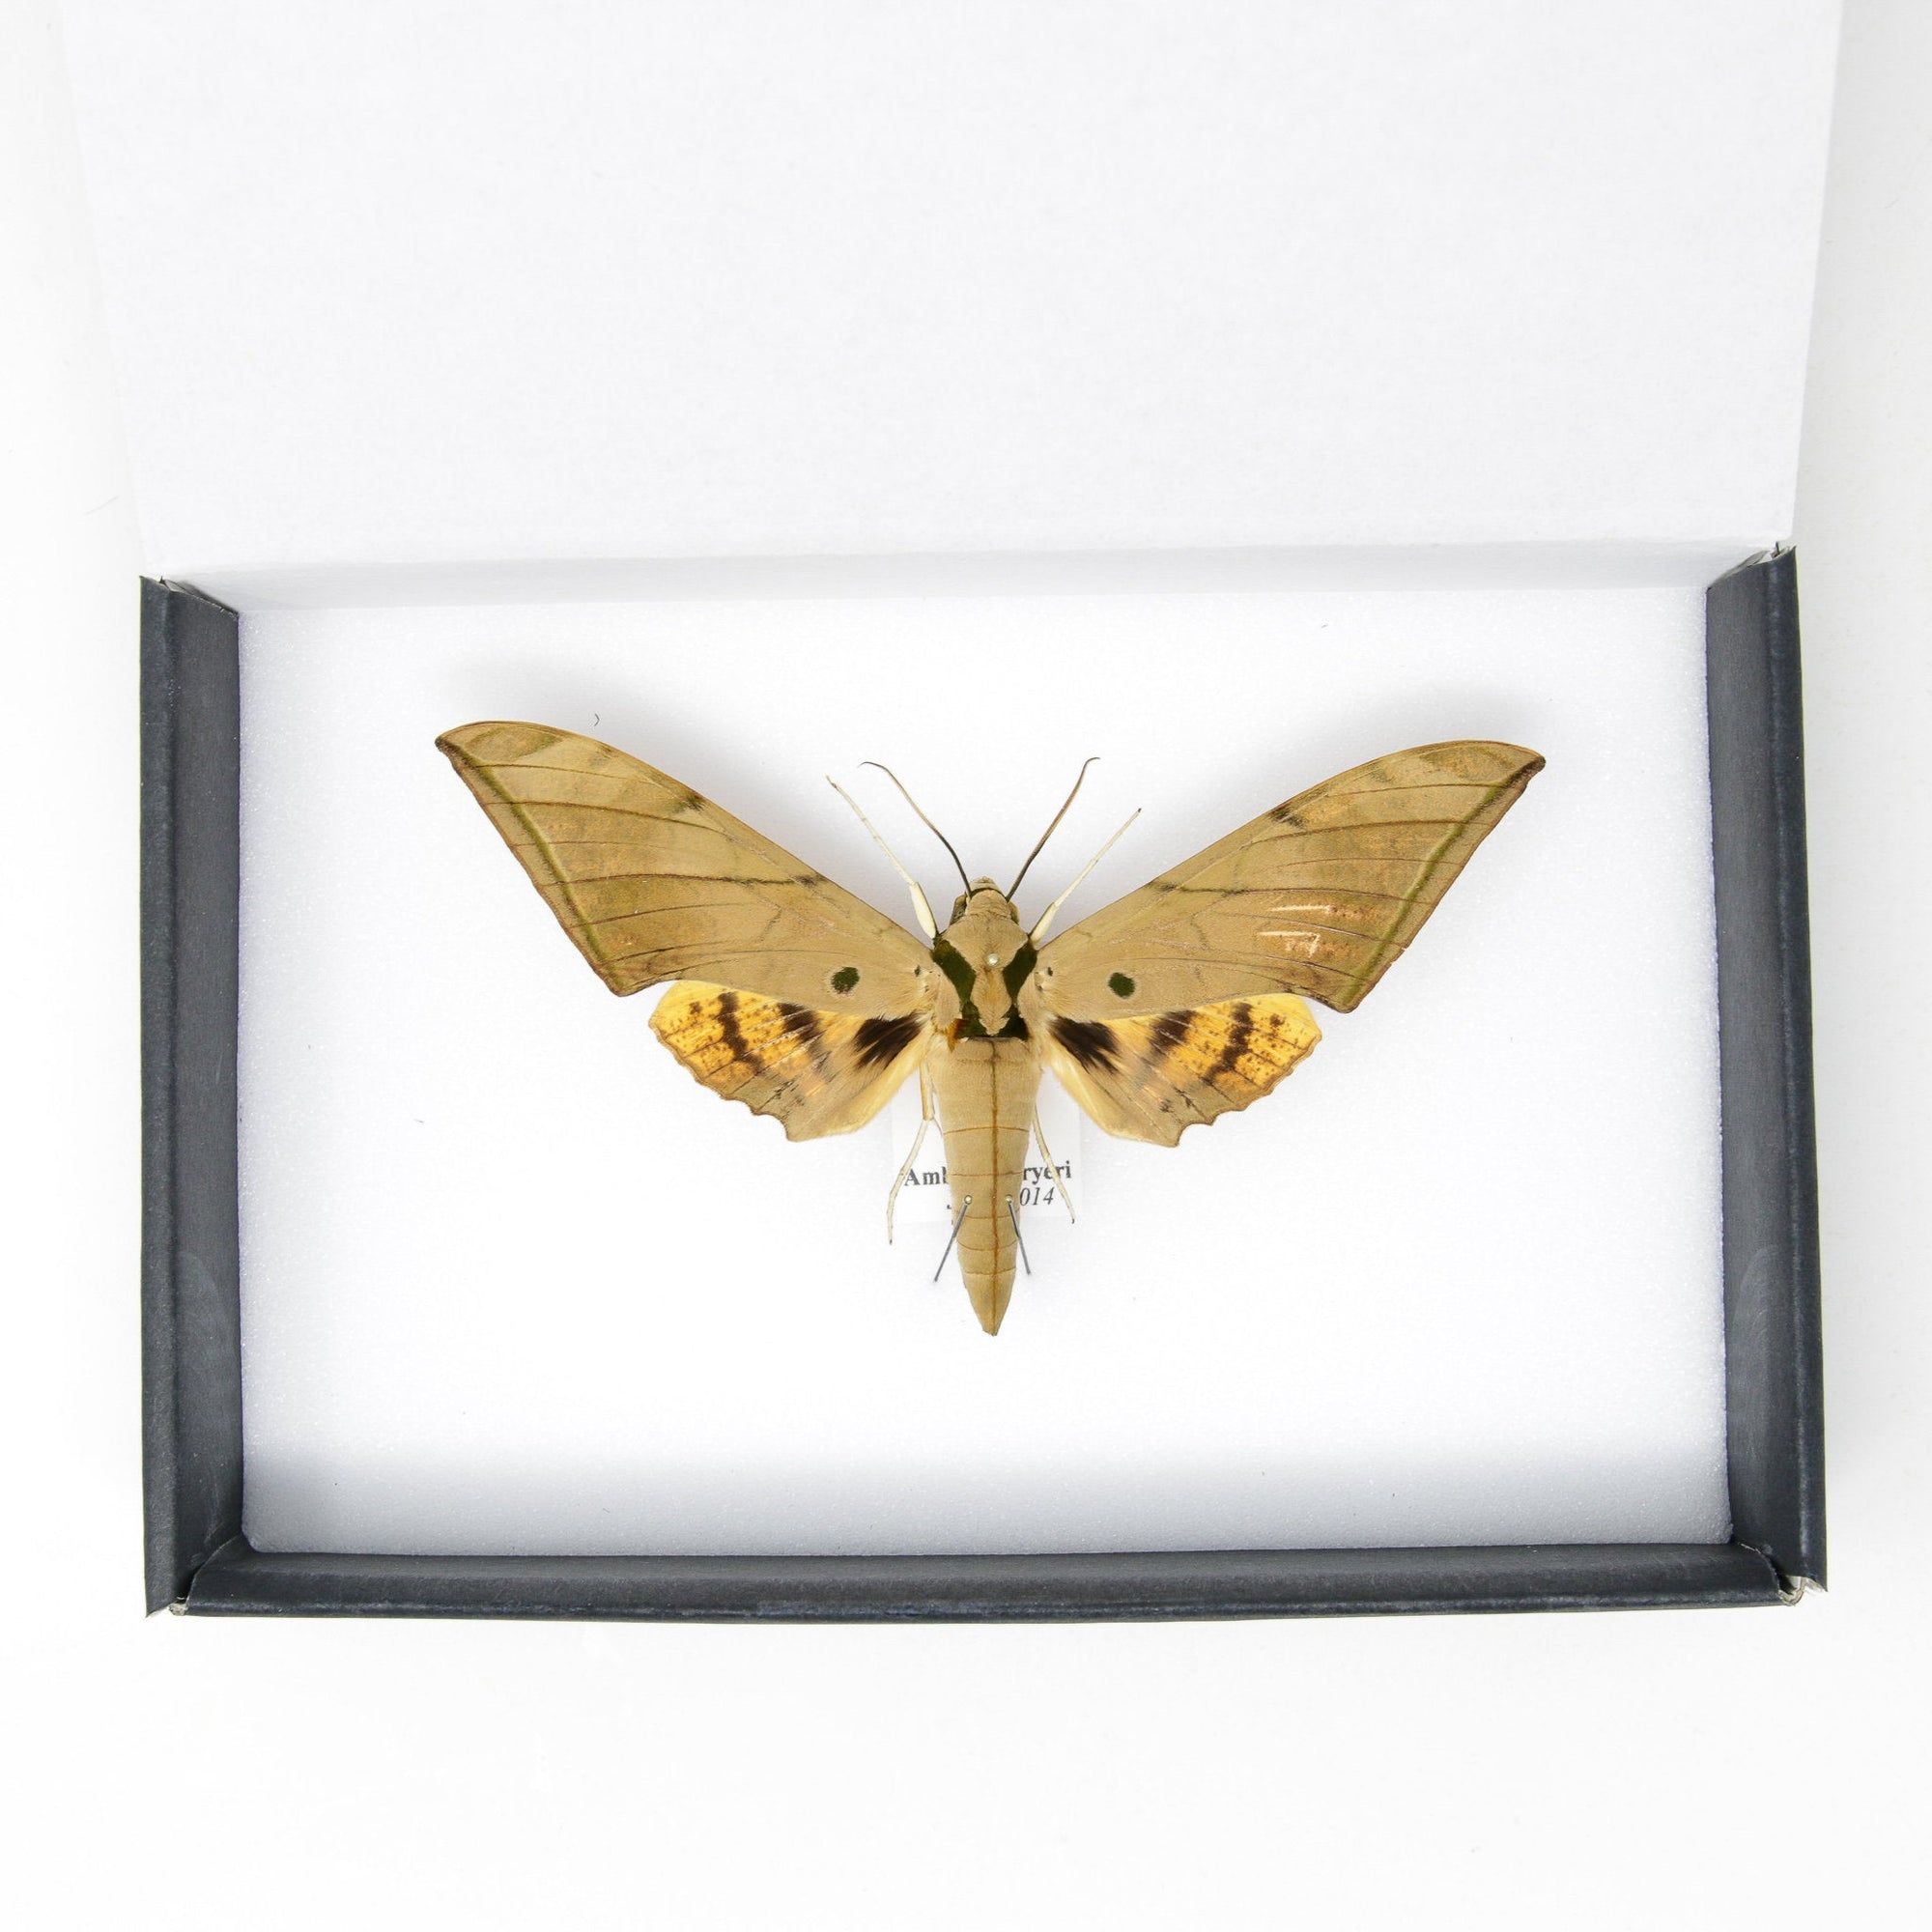 1 x Ambulyx pryeri | Sabah Sphinx Hawkmoth | Pinned Lepidoptera A1-